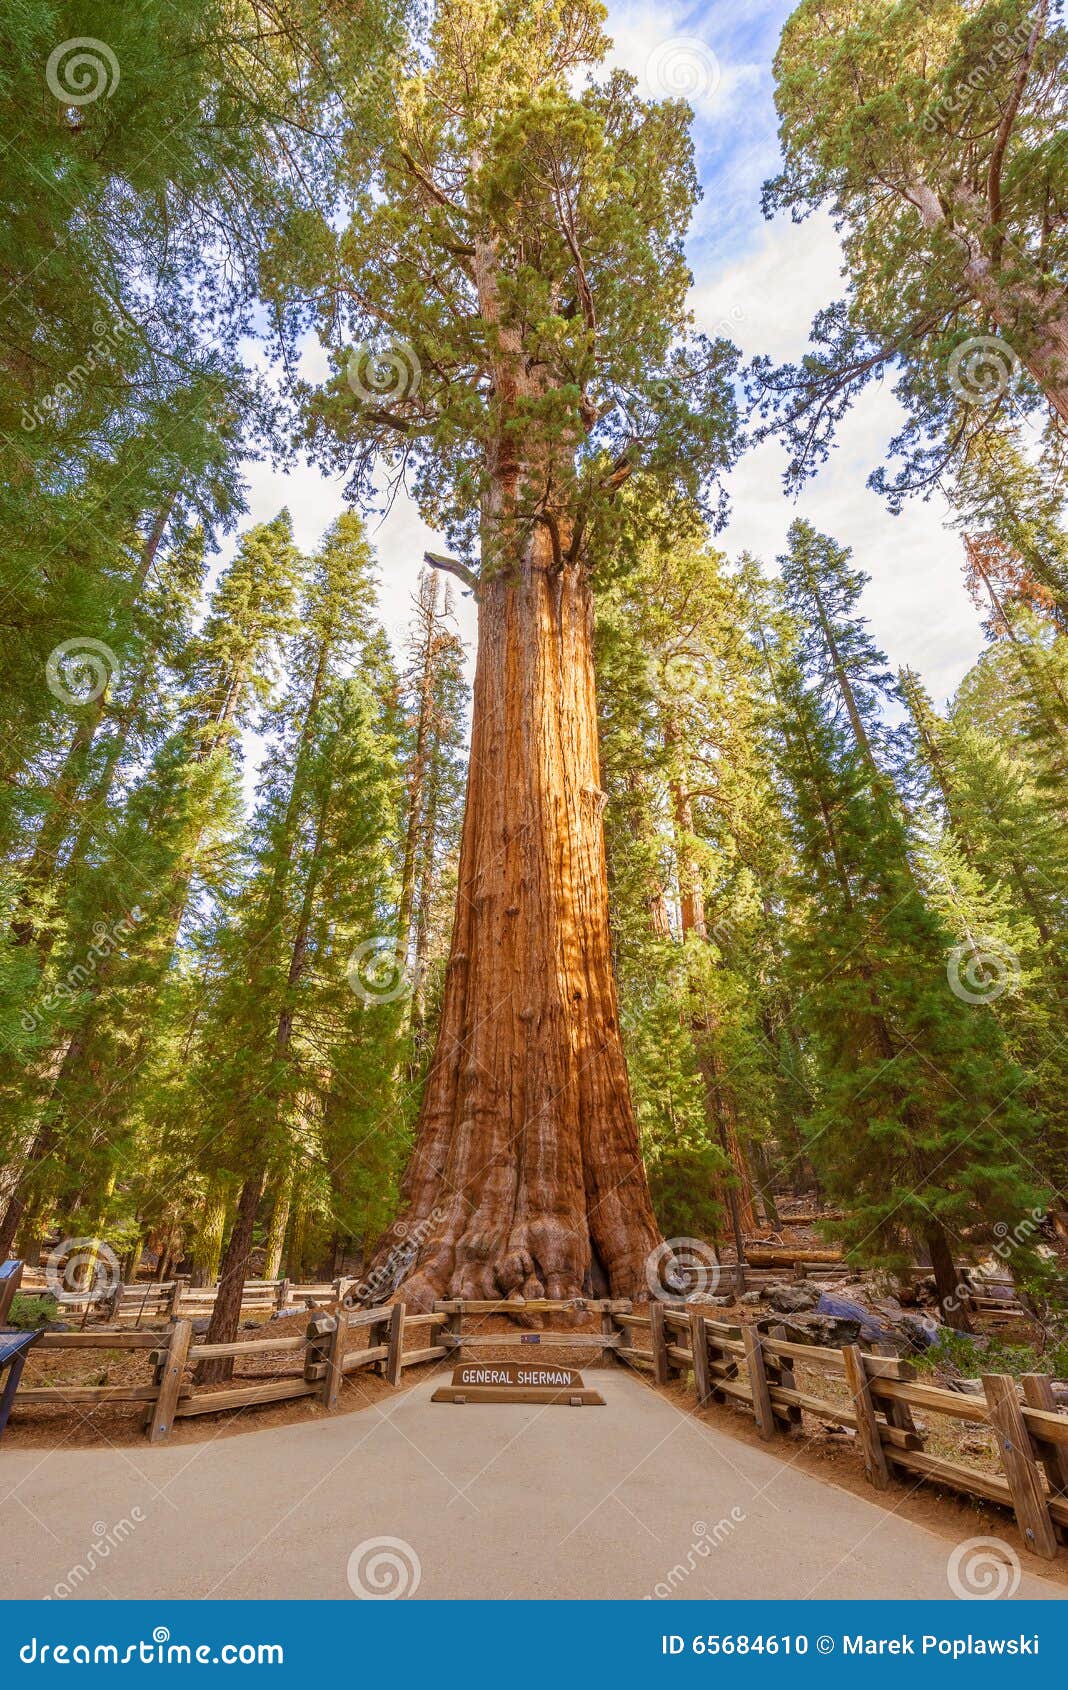 general sherman tree in sequoia national park, california usa